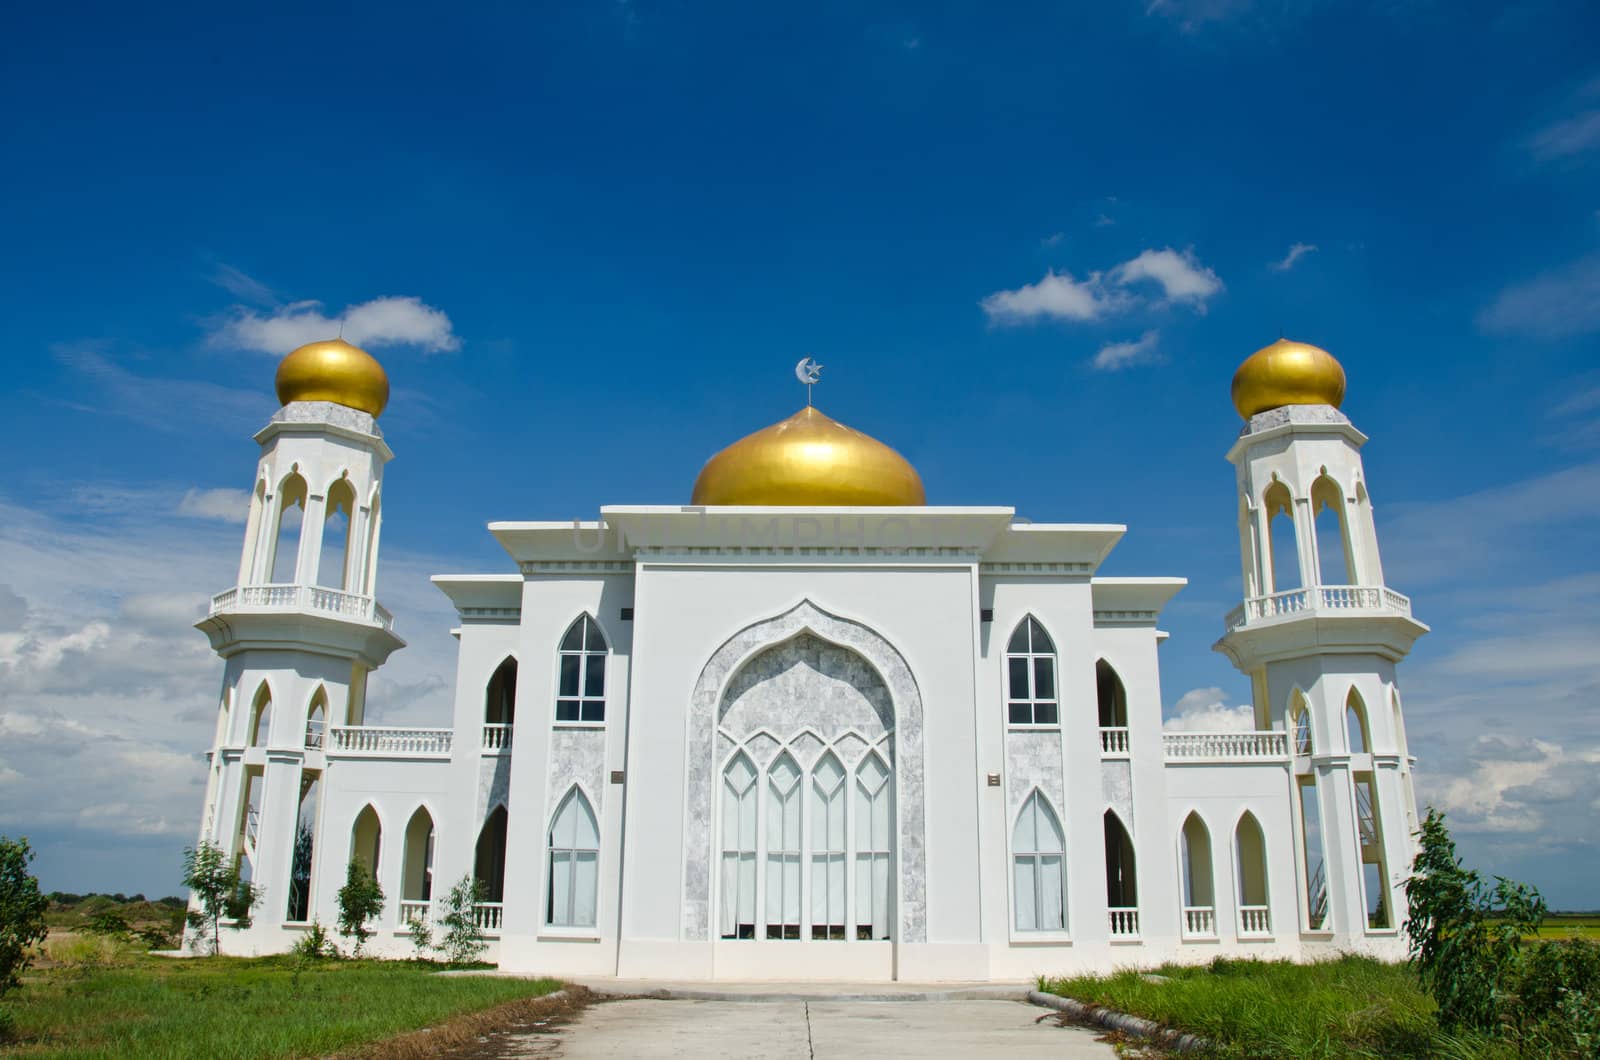 Mosque of Islam. Ayutthaya Province, Thailand.